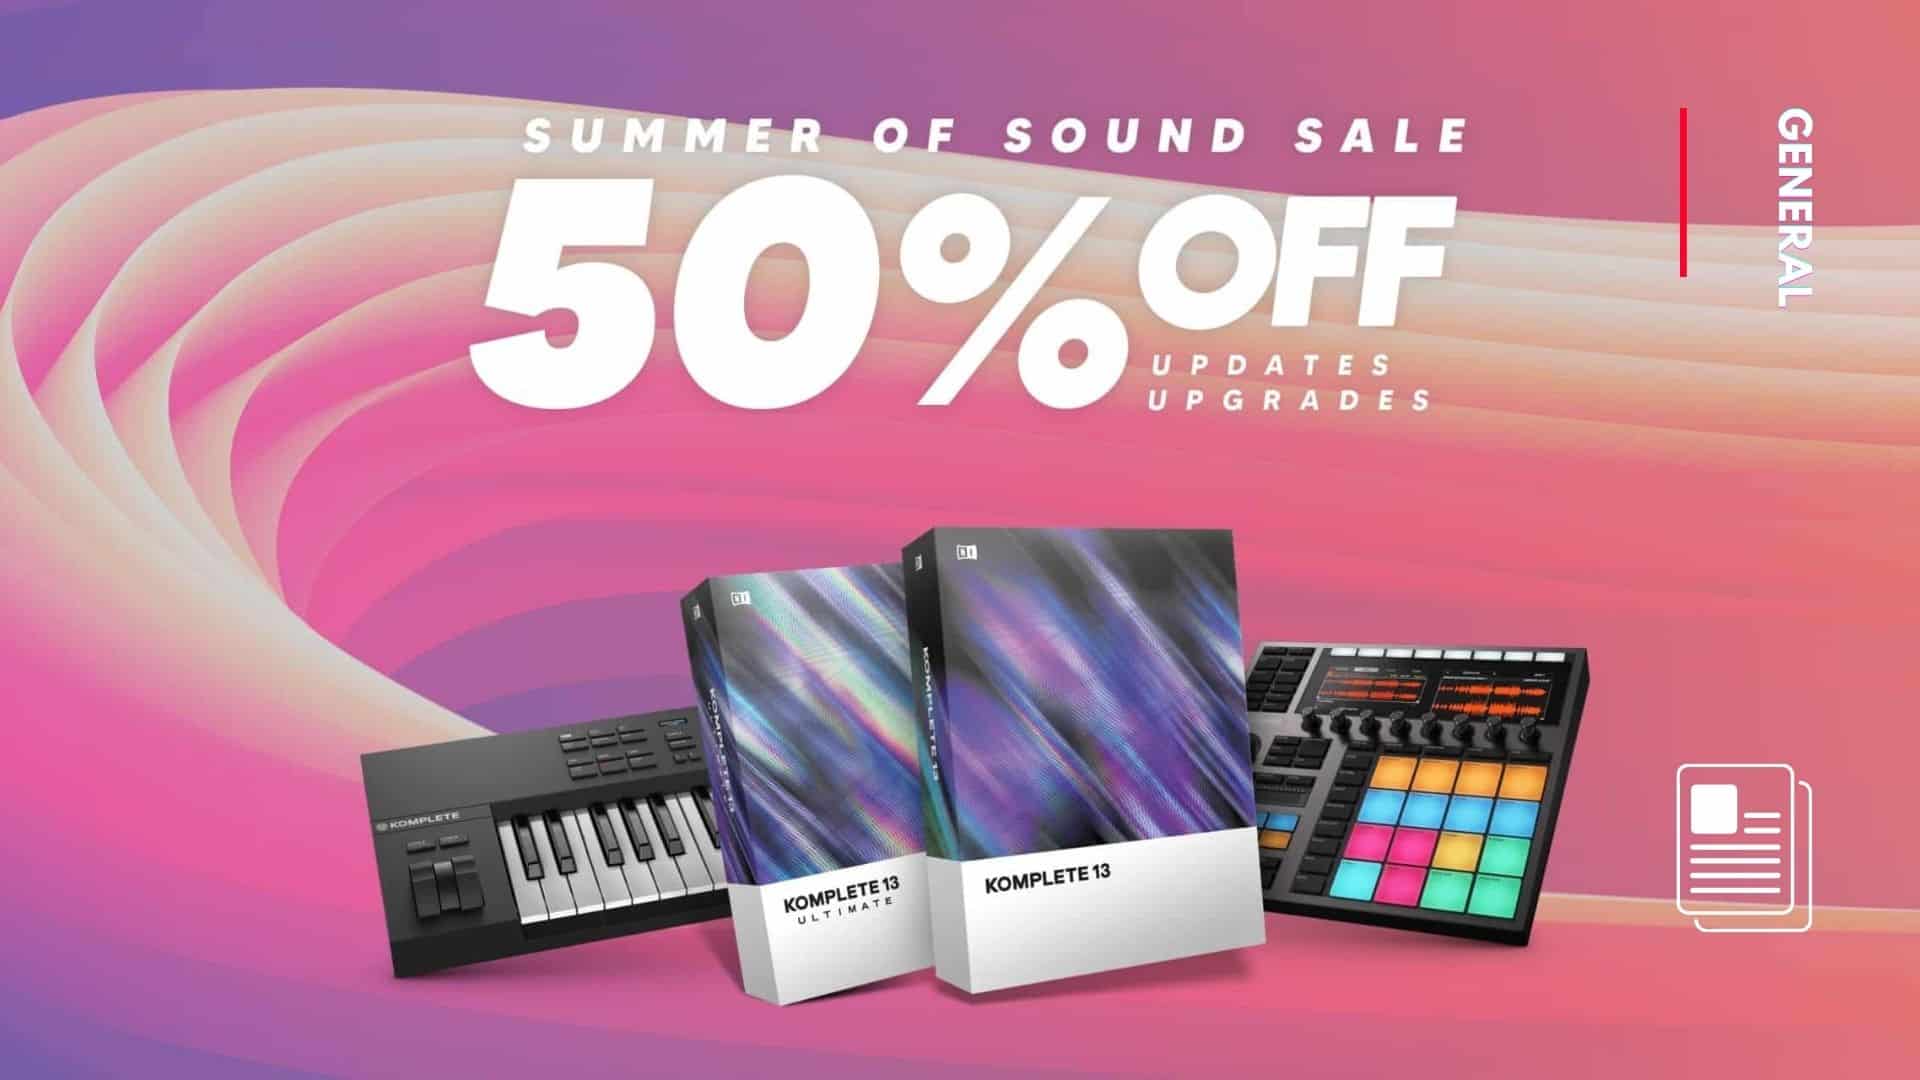 Get 50% off through Native Instruments' Summer Of Sound Sale